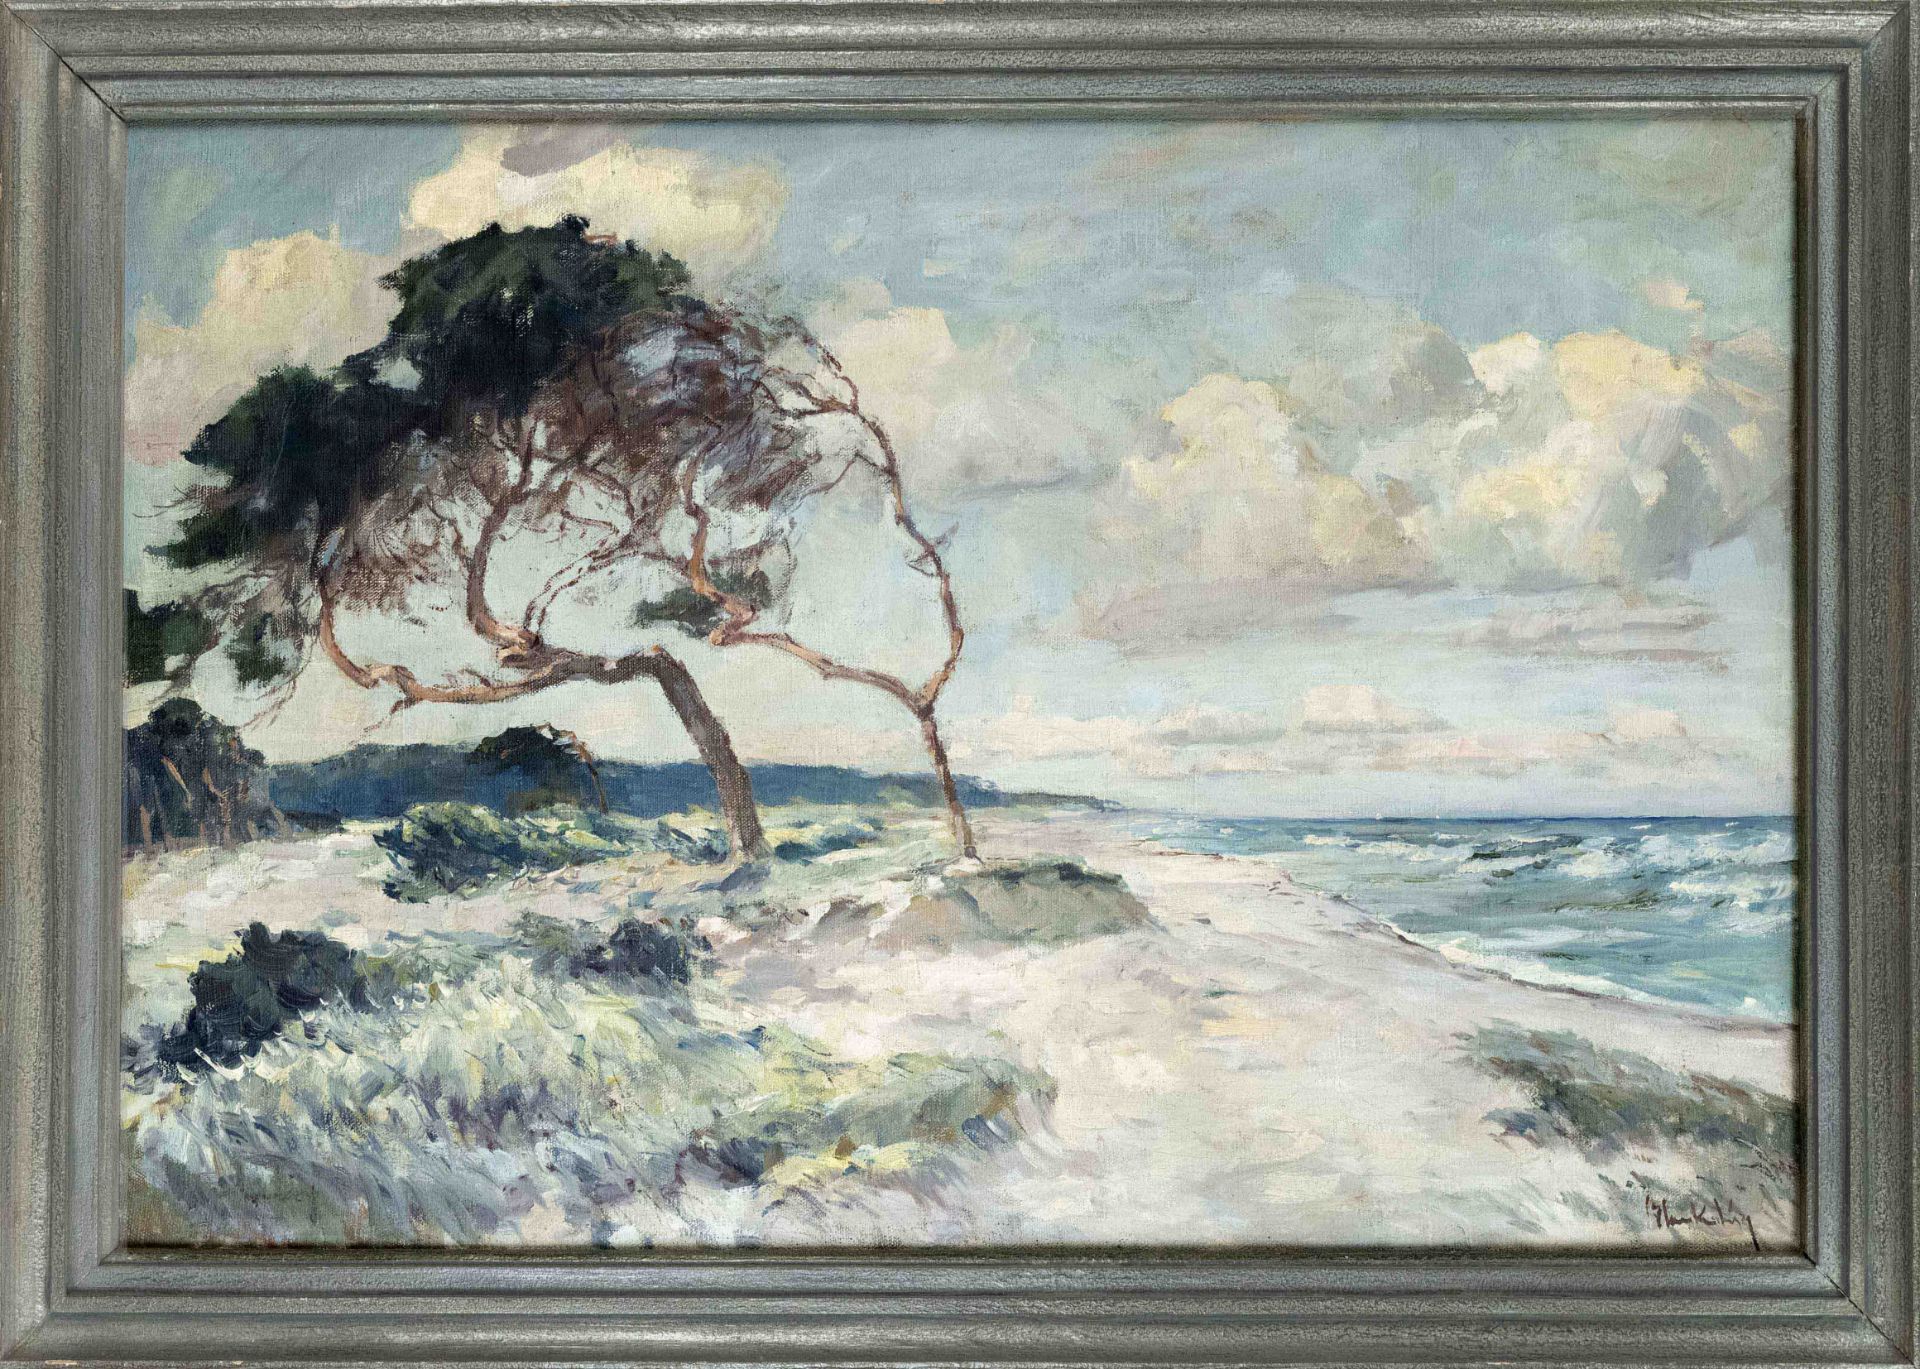 Richard Blankenburg (1891-1955), landscape painter from Frankfurt/Oder who worked in Rostock.